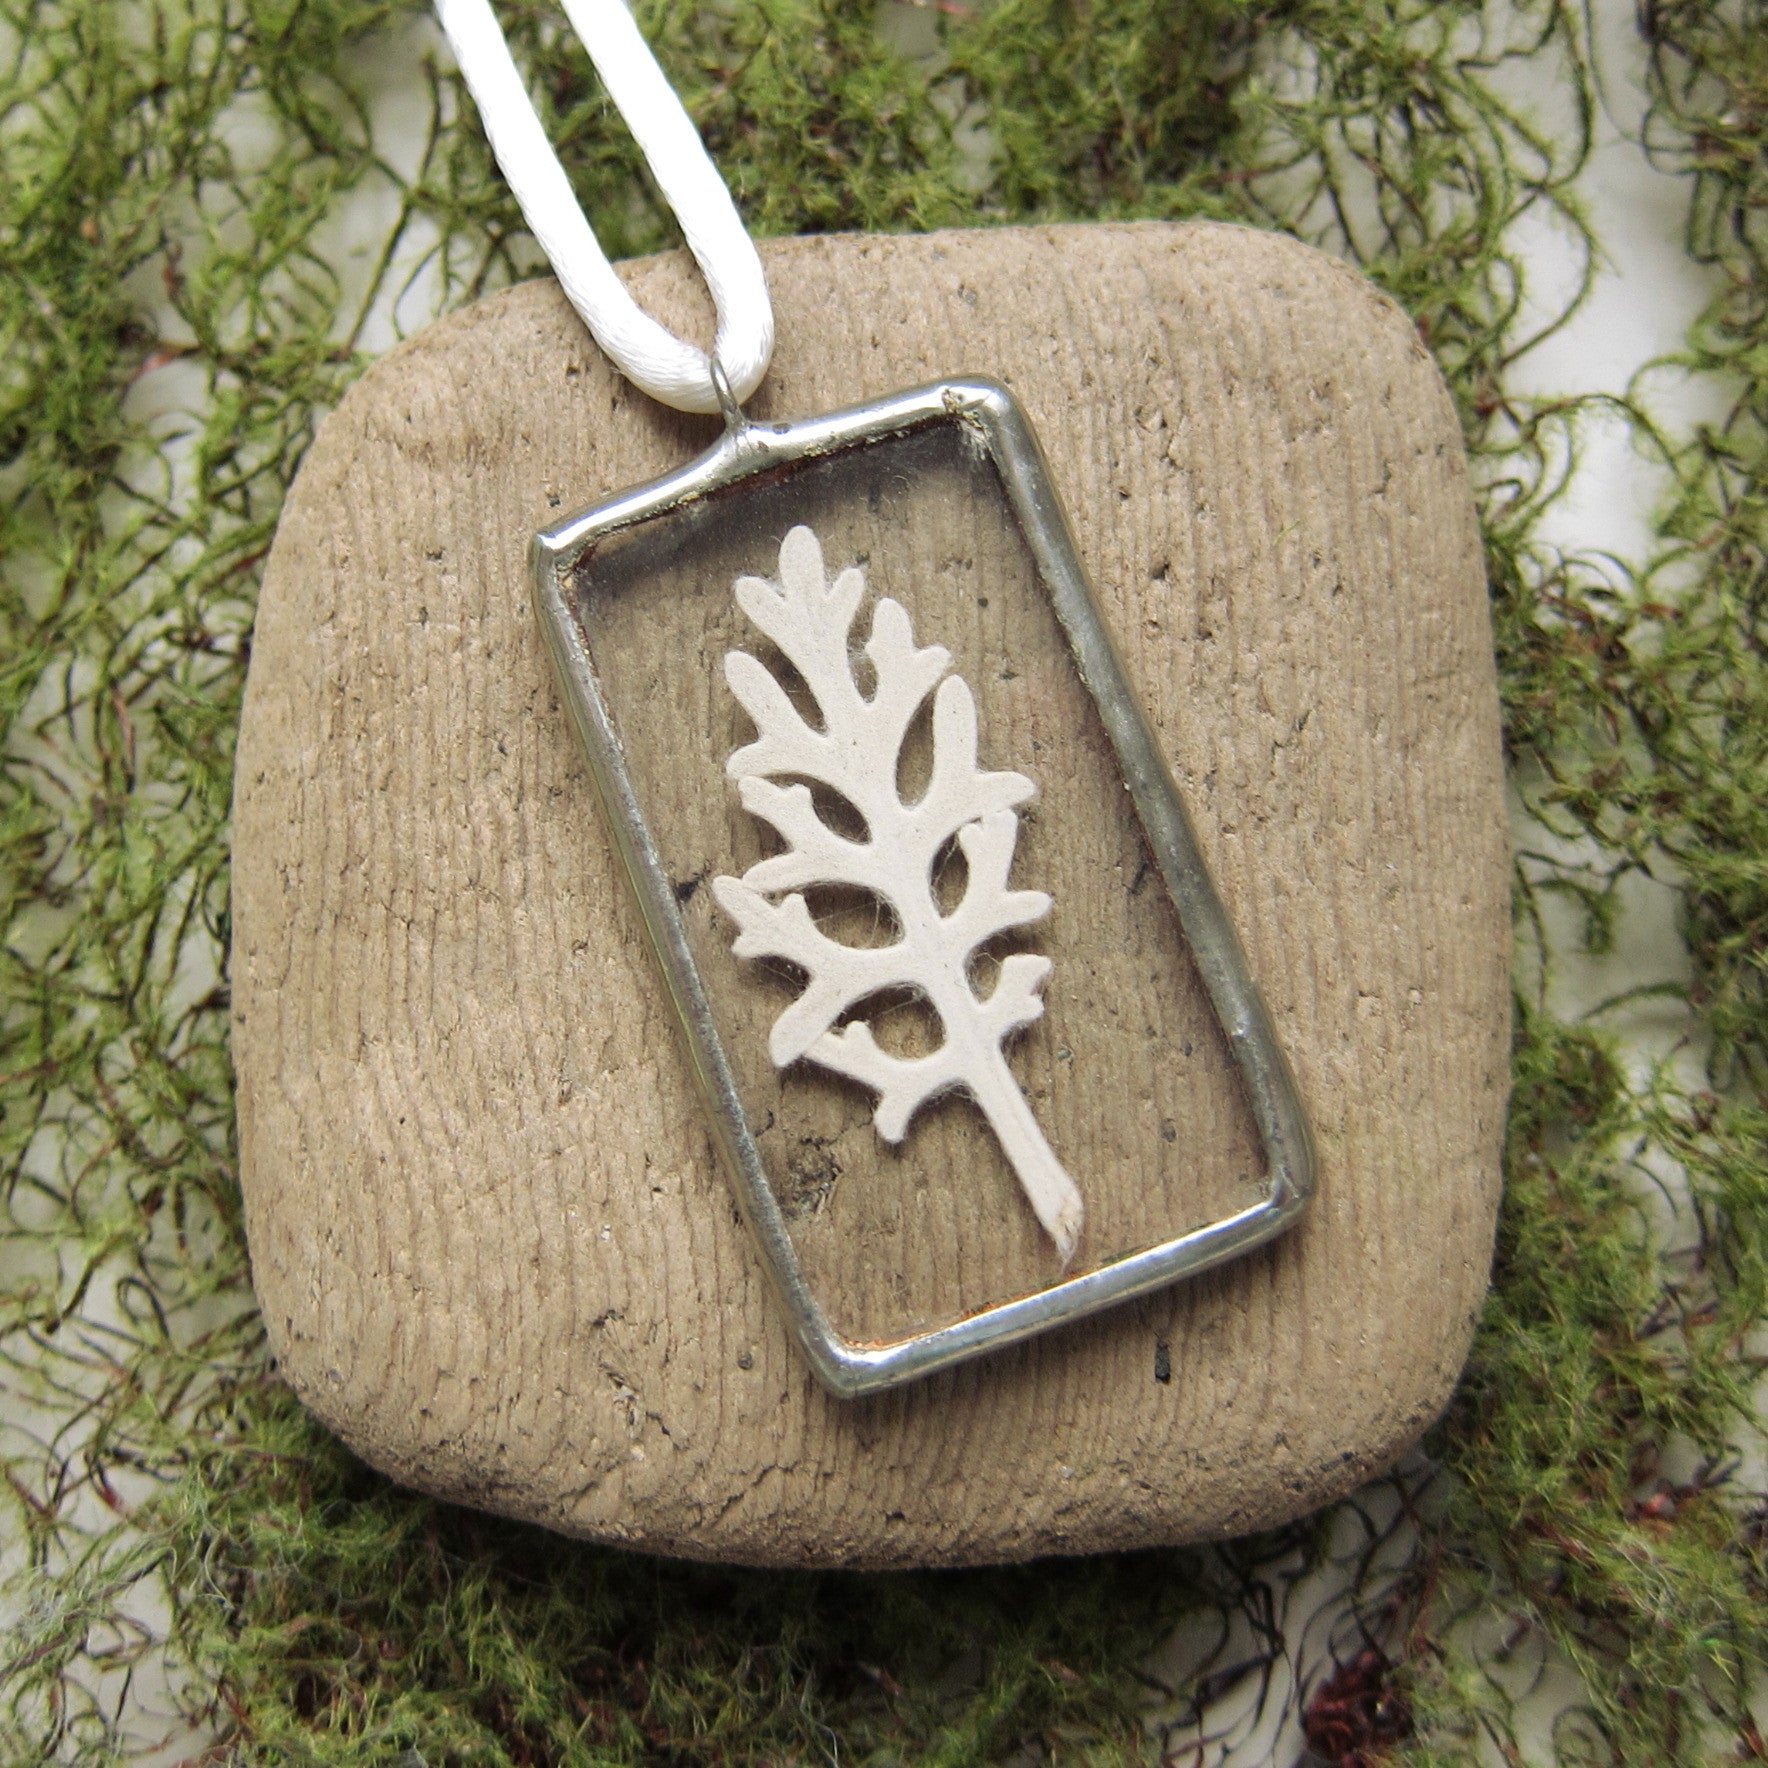 Dusty miller leaf in soldered glass pendant necklace